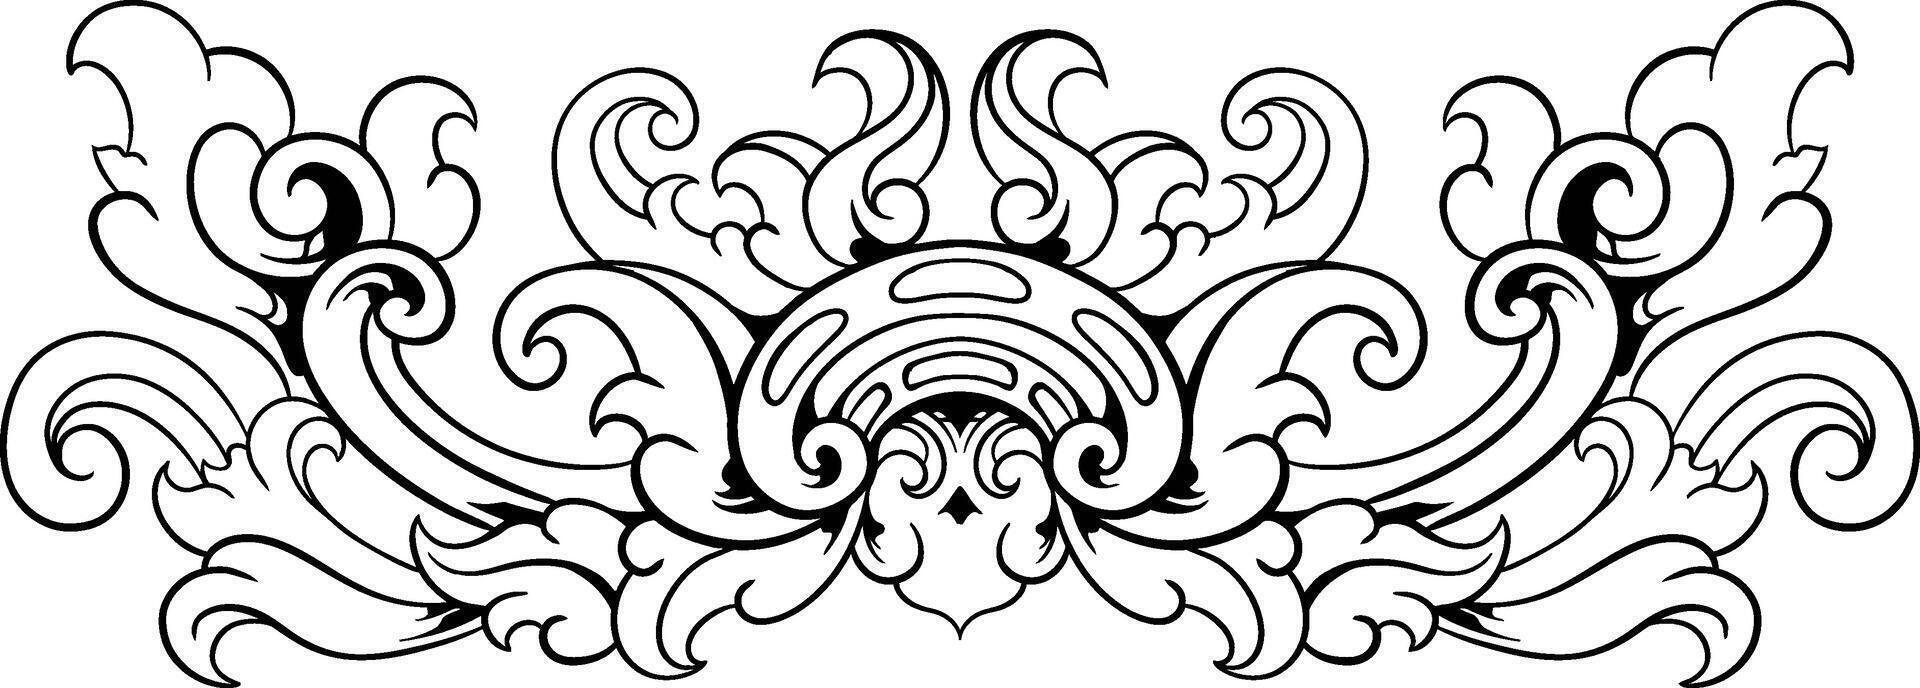 Vintage Baroque Victorian frame border floral ornament leaf scroll engraved retro flower pattern decorative design tattoo black and white vector